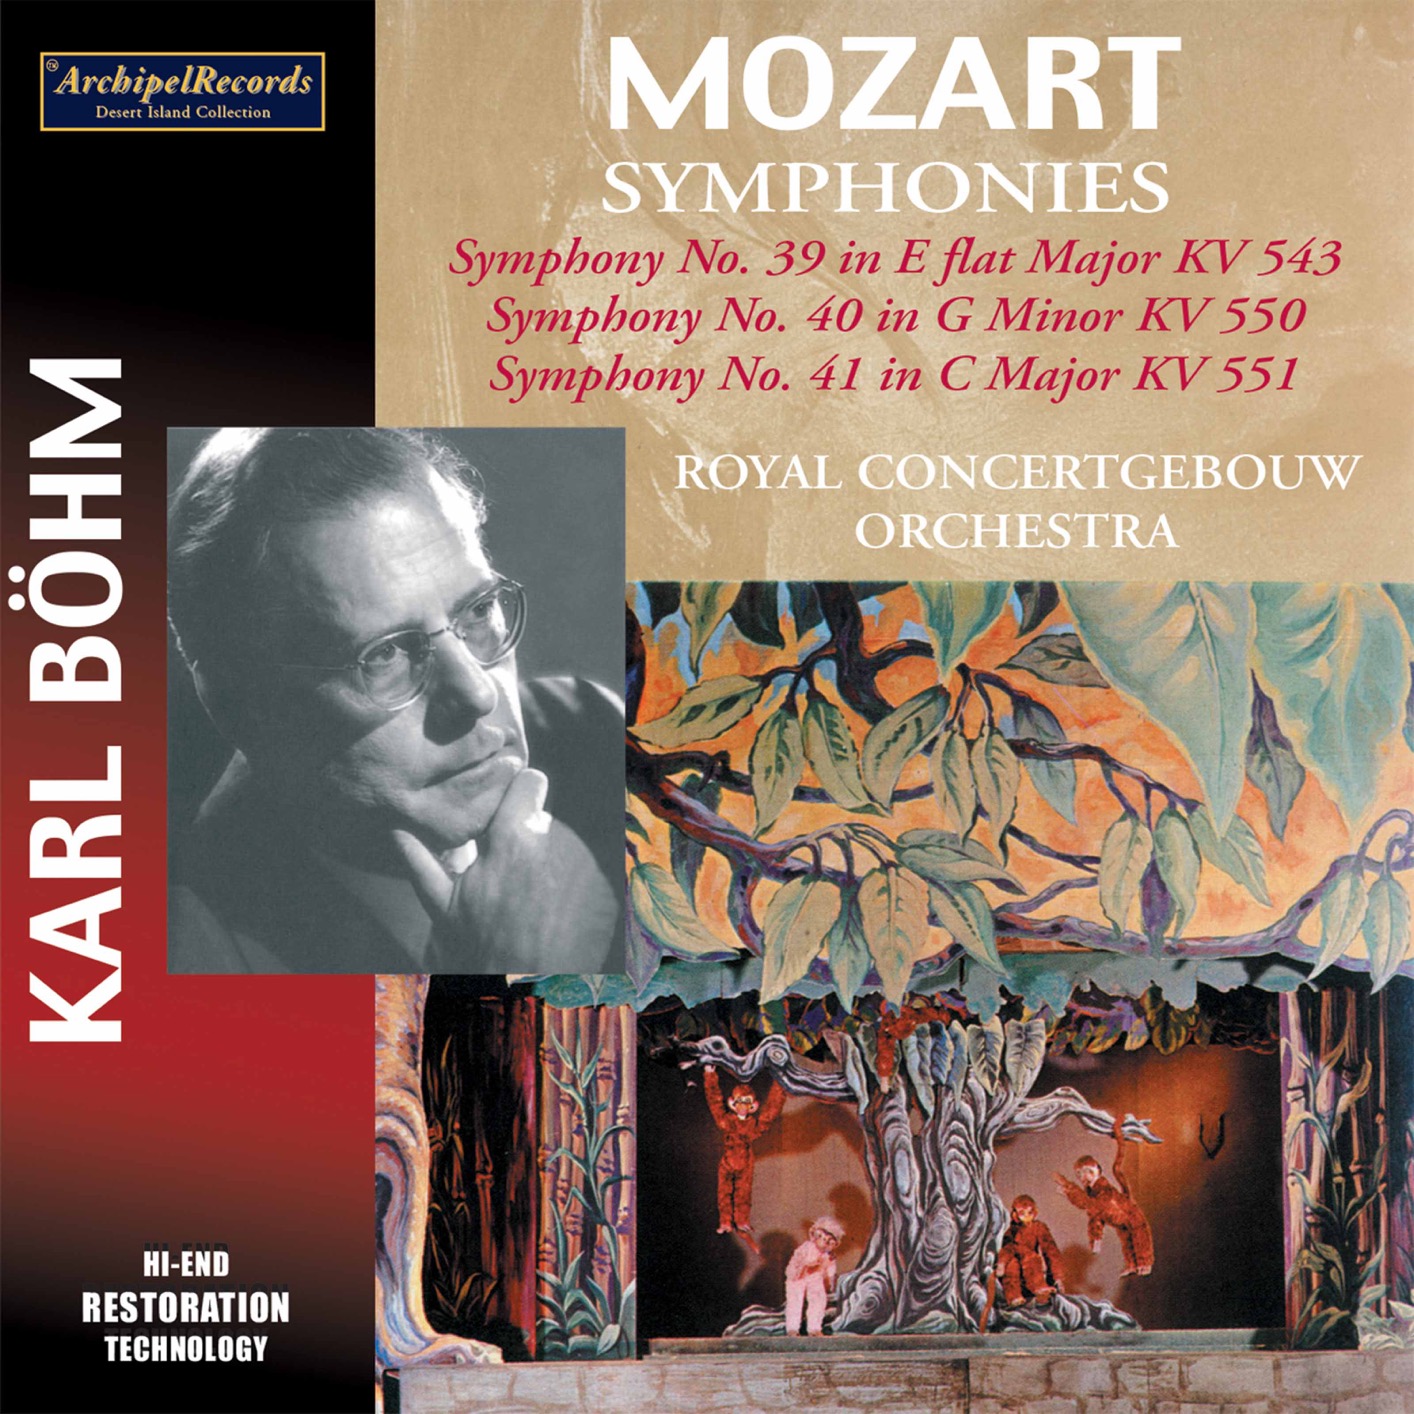 Royal Concertgebouw Orchestra & Karl Bohm - Mozart: Symphonies Nos. 39-41 (Remastered) (2021) [FLAC 24bit/48kHz]